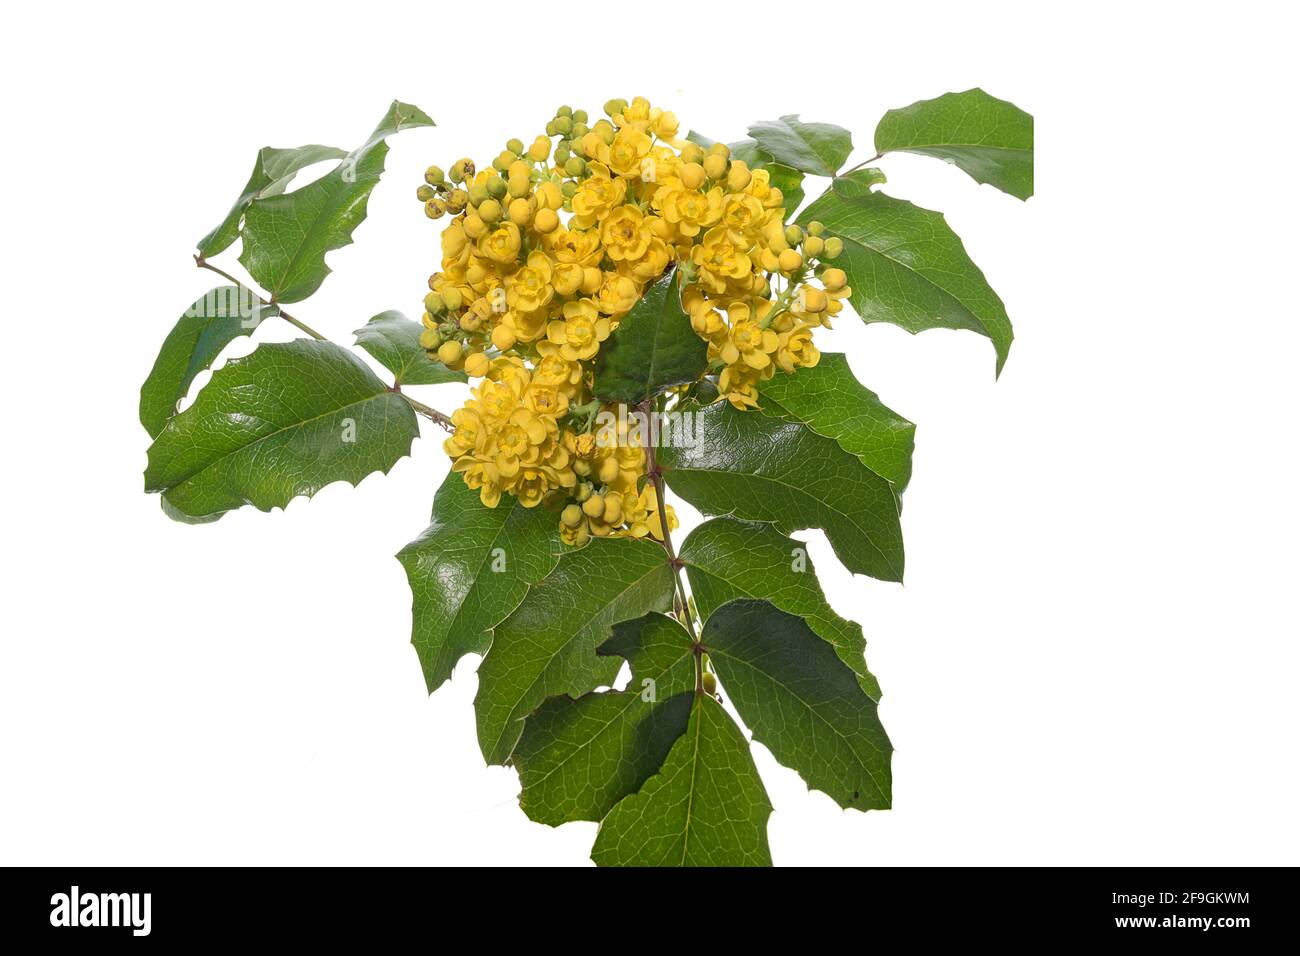 Flower of a Holly (Ilex aquifolium) on a white background, Germany Stock Photo